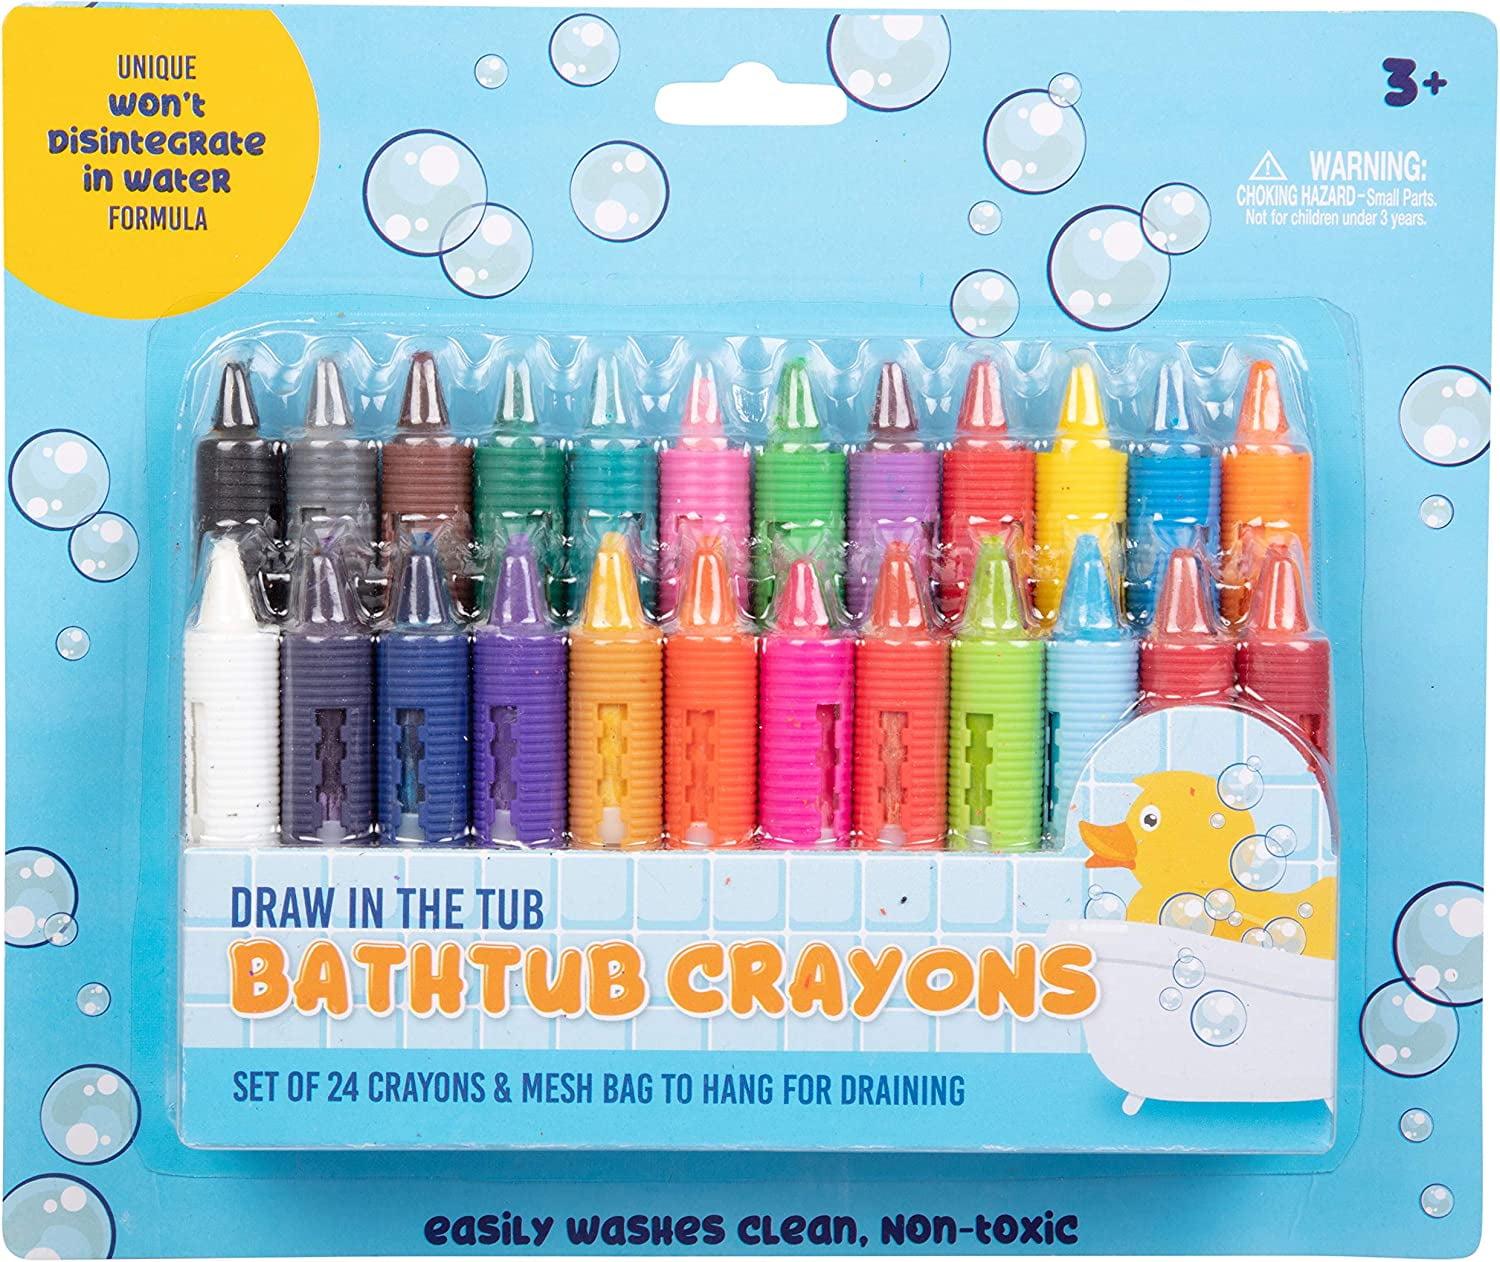 How to remove Crayola bathtub crayons? : r/CleaningTips